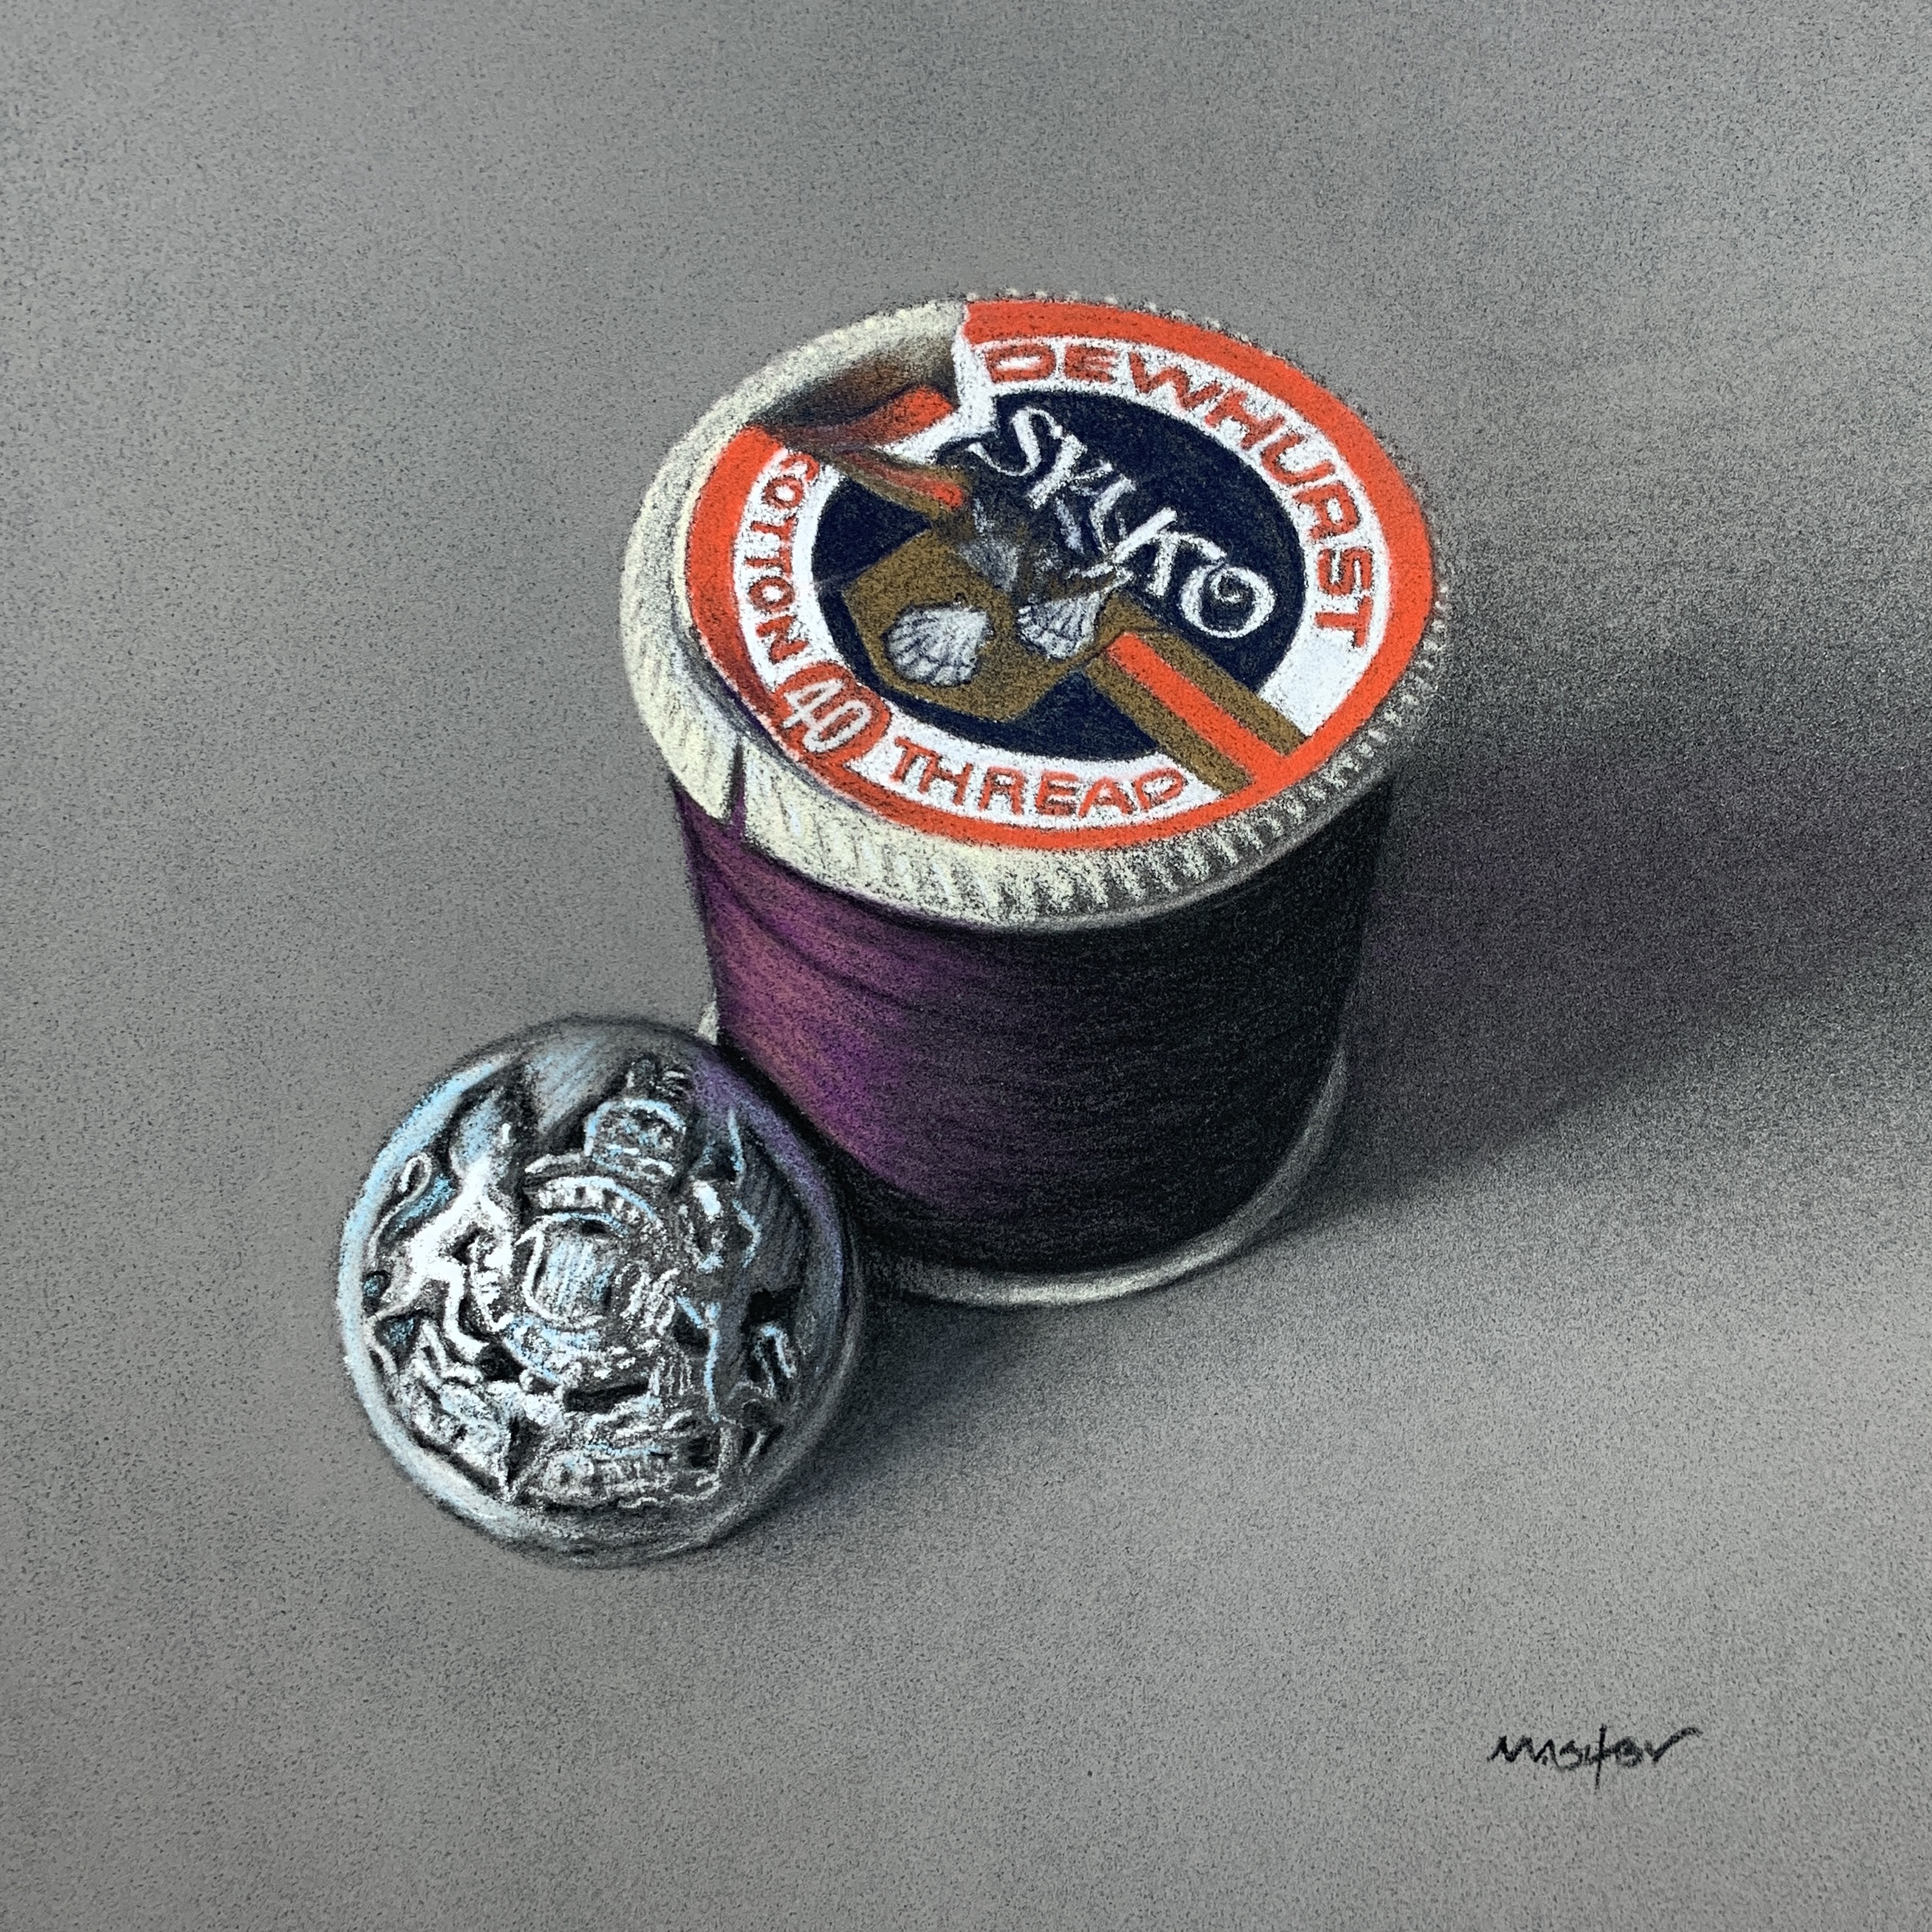 Pastel still lifes - Michele Ashby, "The Royal Button," pastel